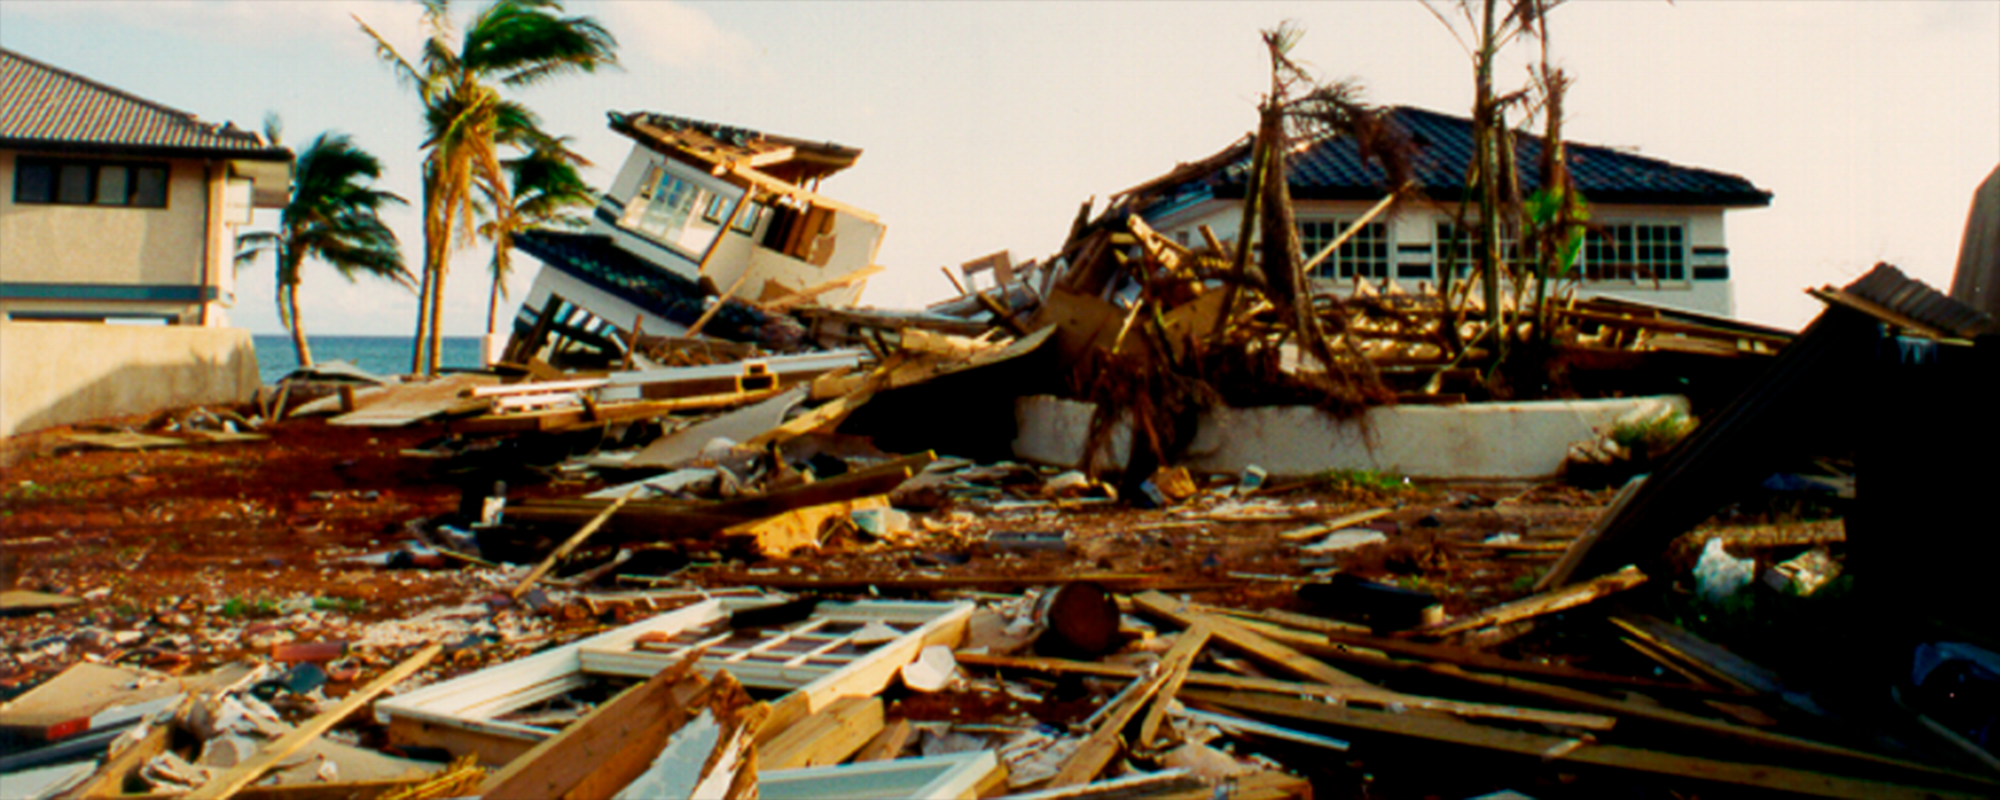 Hurricane Damage, Real Estate Damage, Complex Valuation, Randall Bell Ph.D. M.B.A. M.A.I., Michael Tachovsky Ph.D. C.R.E.A. 